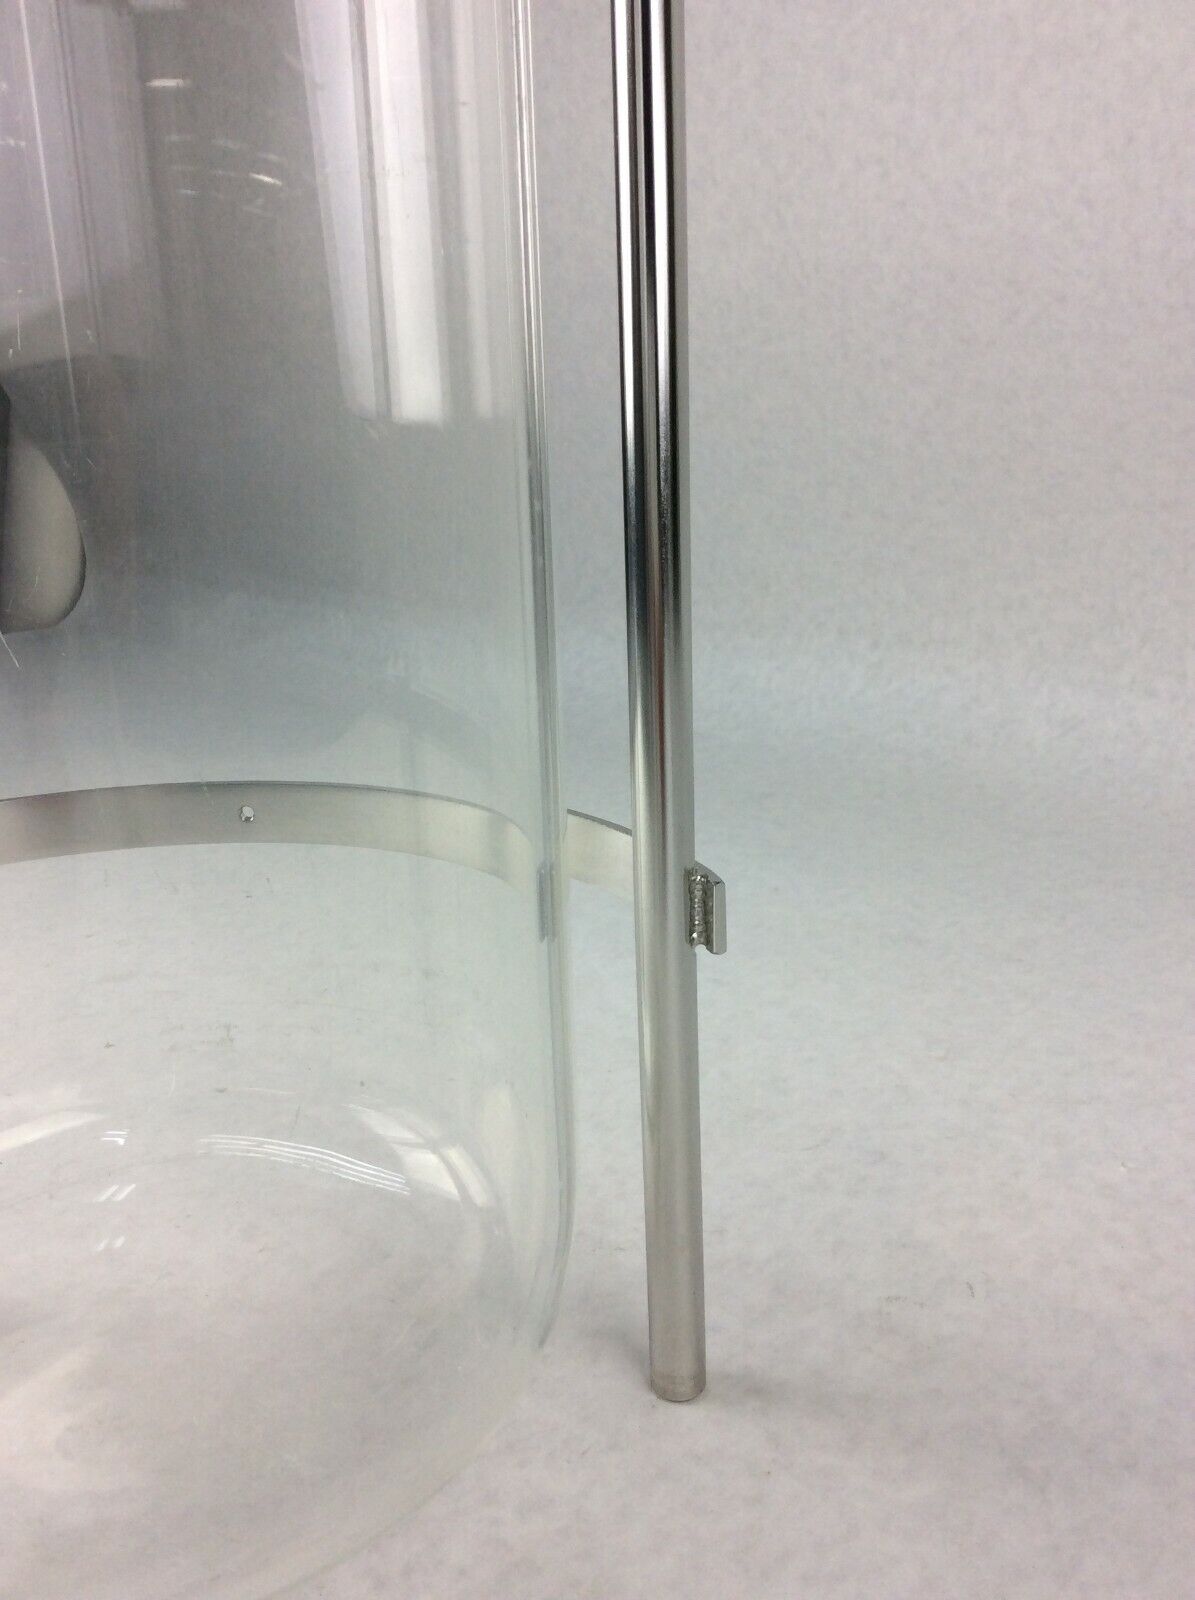 Sartorius Stedim 4L Glass Jacketed Vessel Bioreactor Bio Reactor - Bad Thread